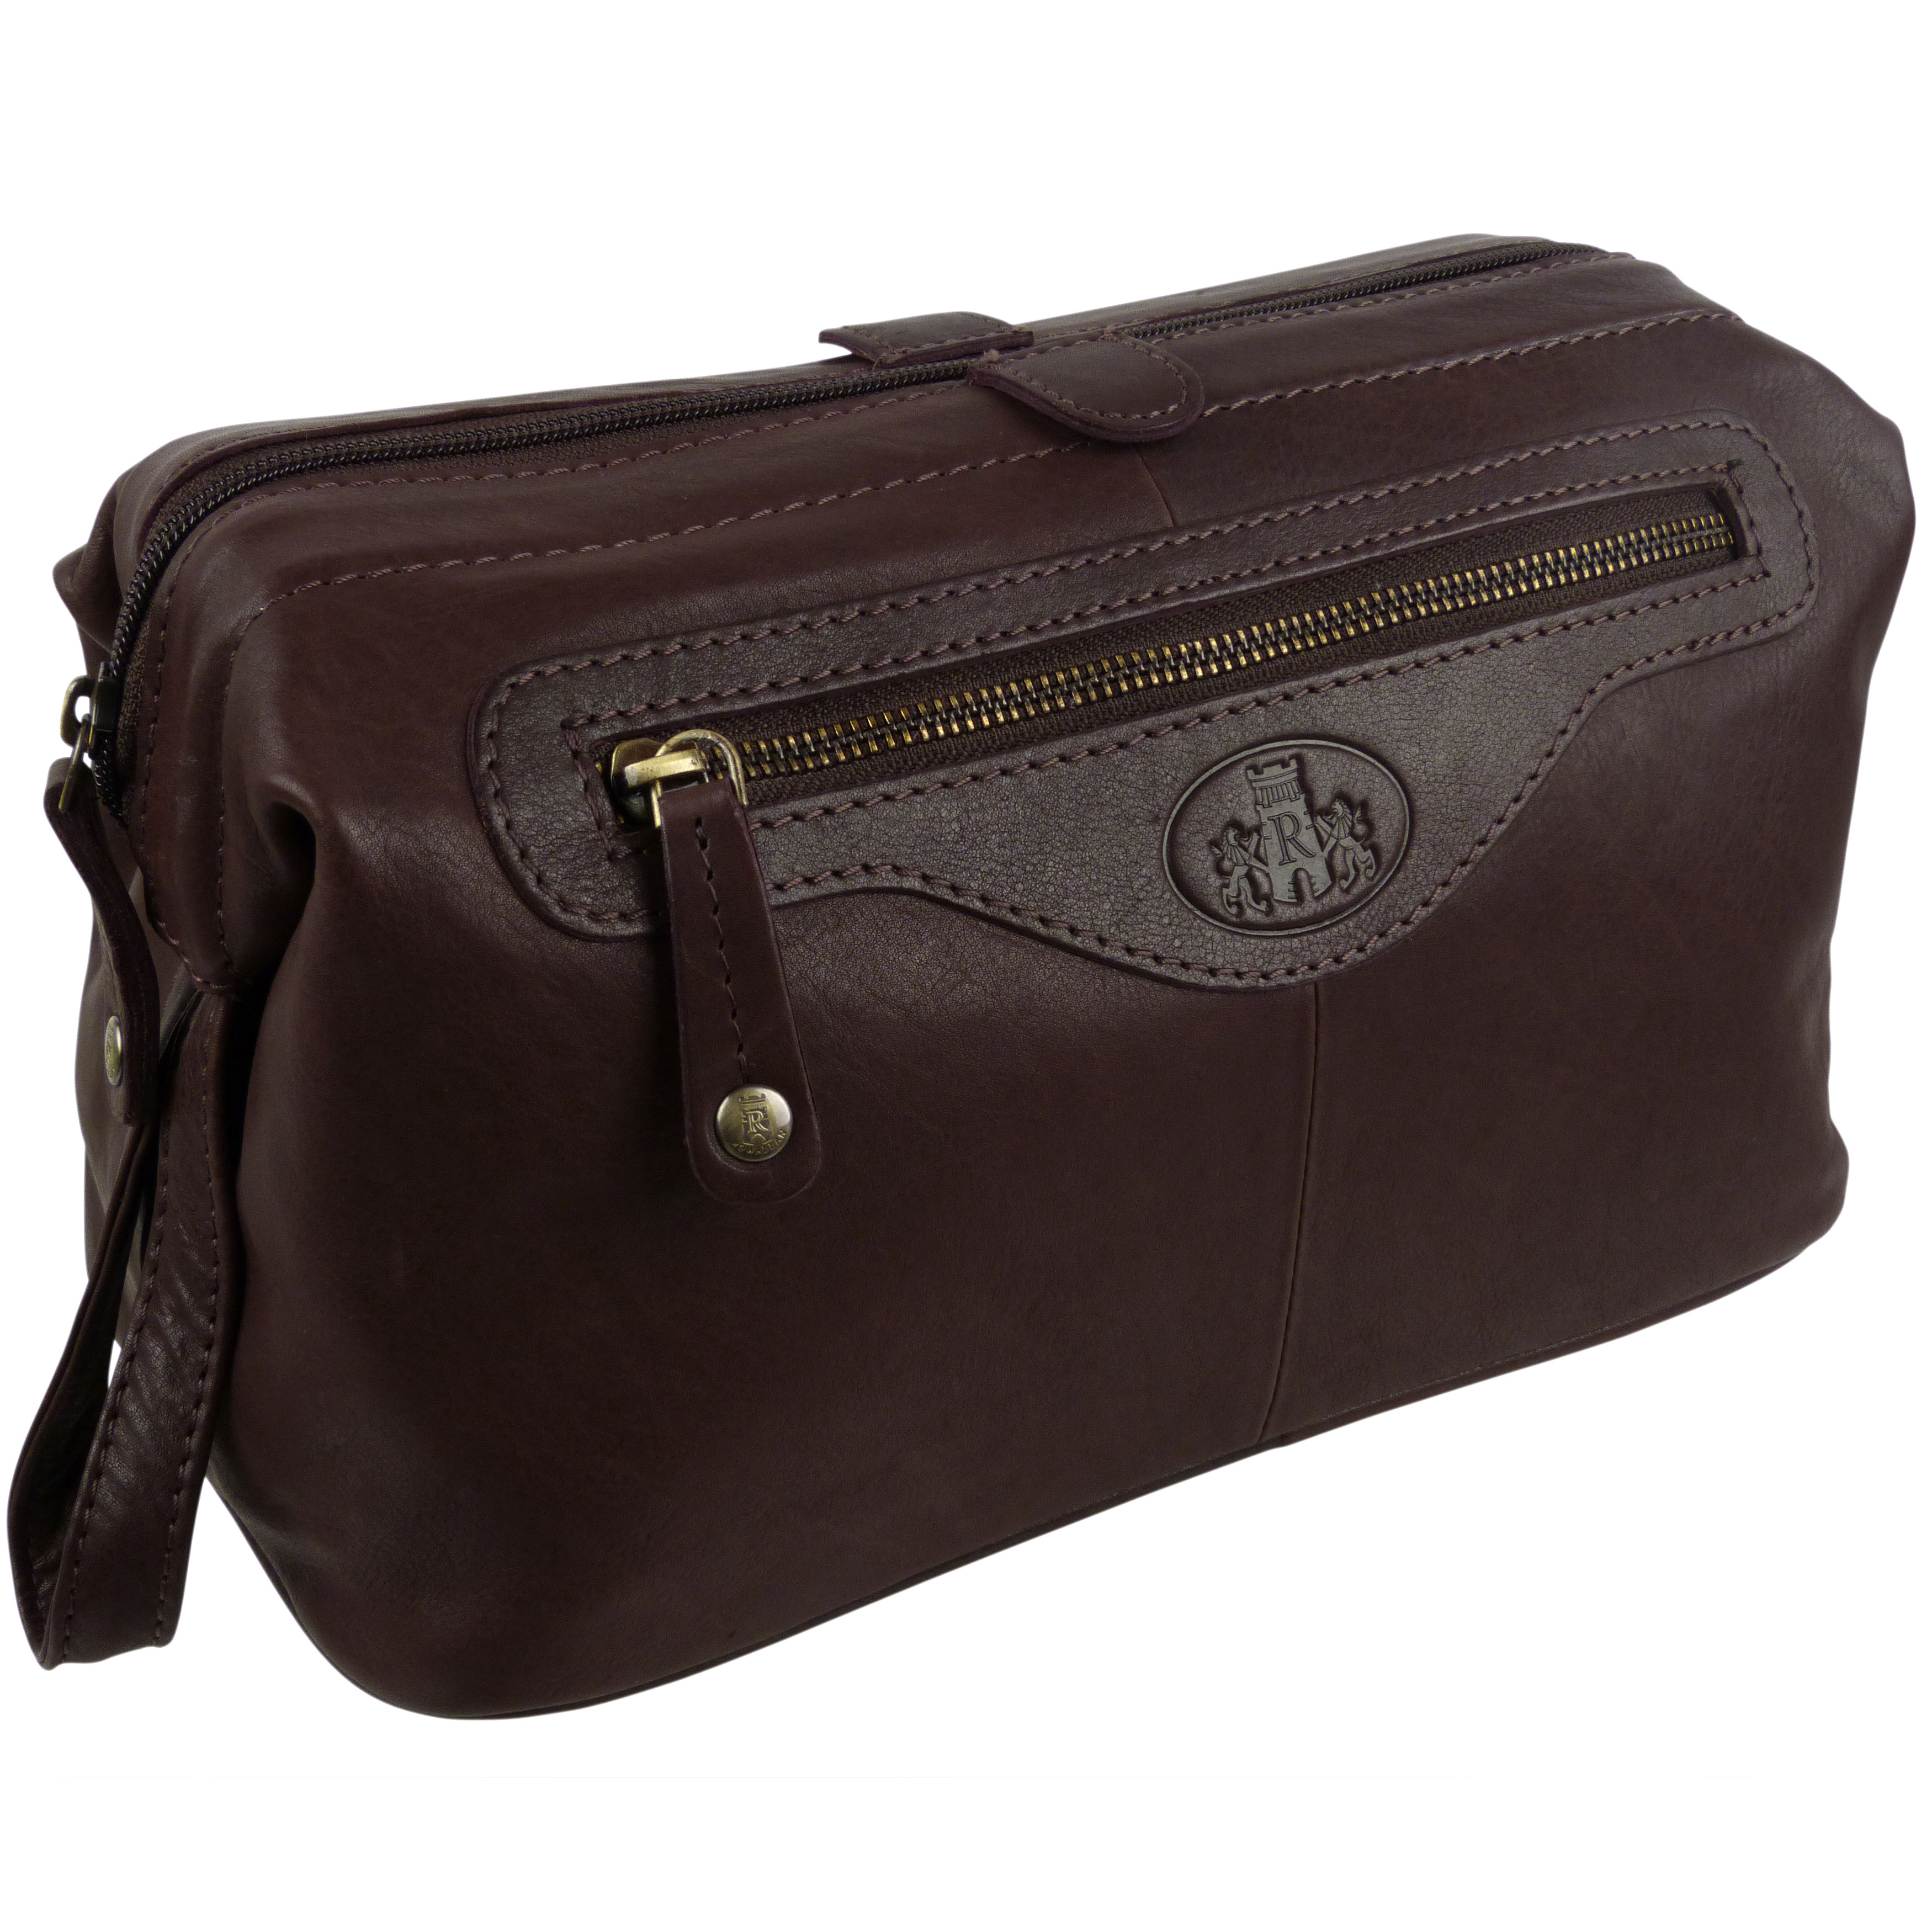 New Mens Rowallan Brown Leather Wash Bag Travel Toiletries Travel Stylish 